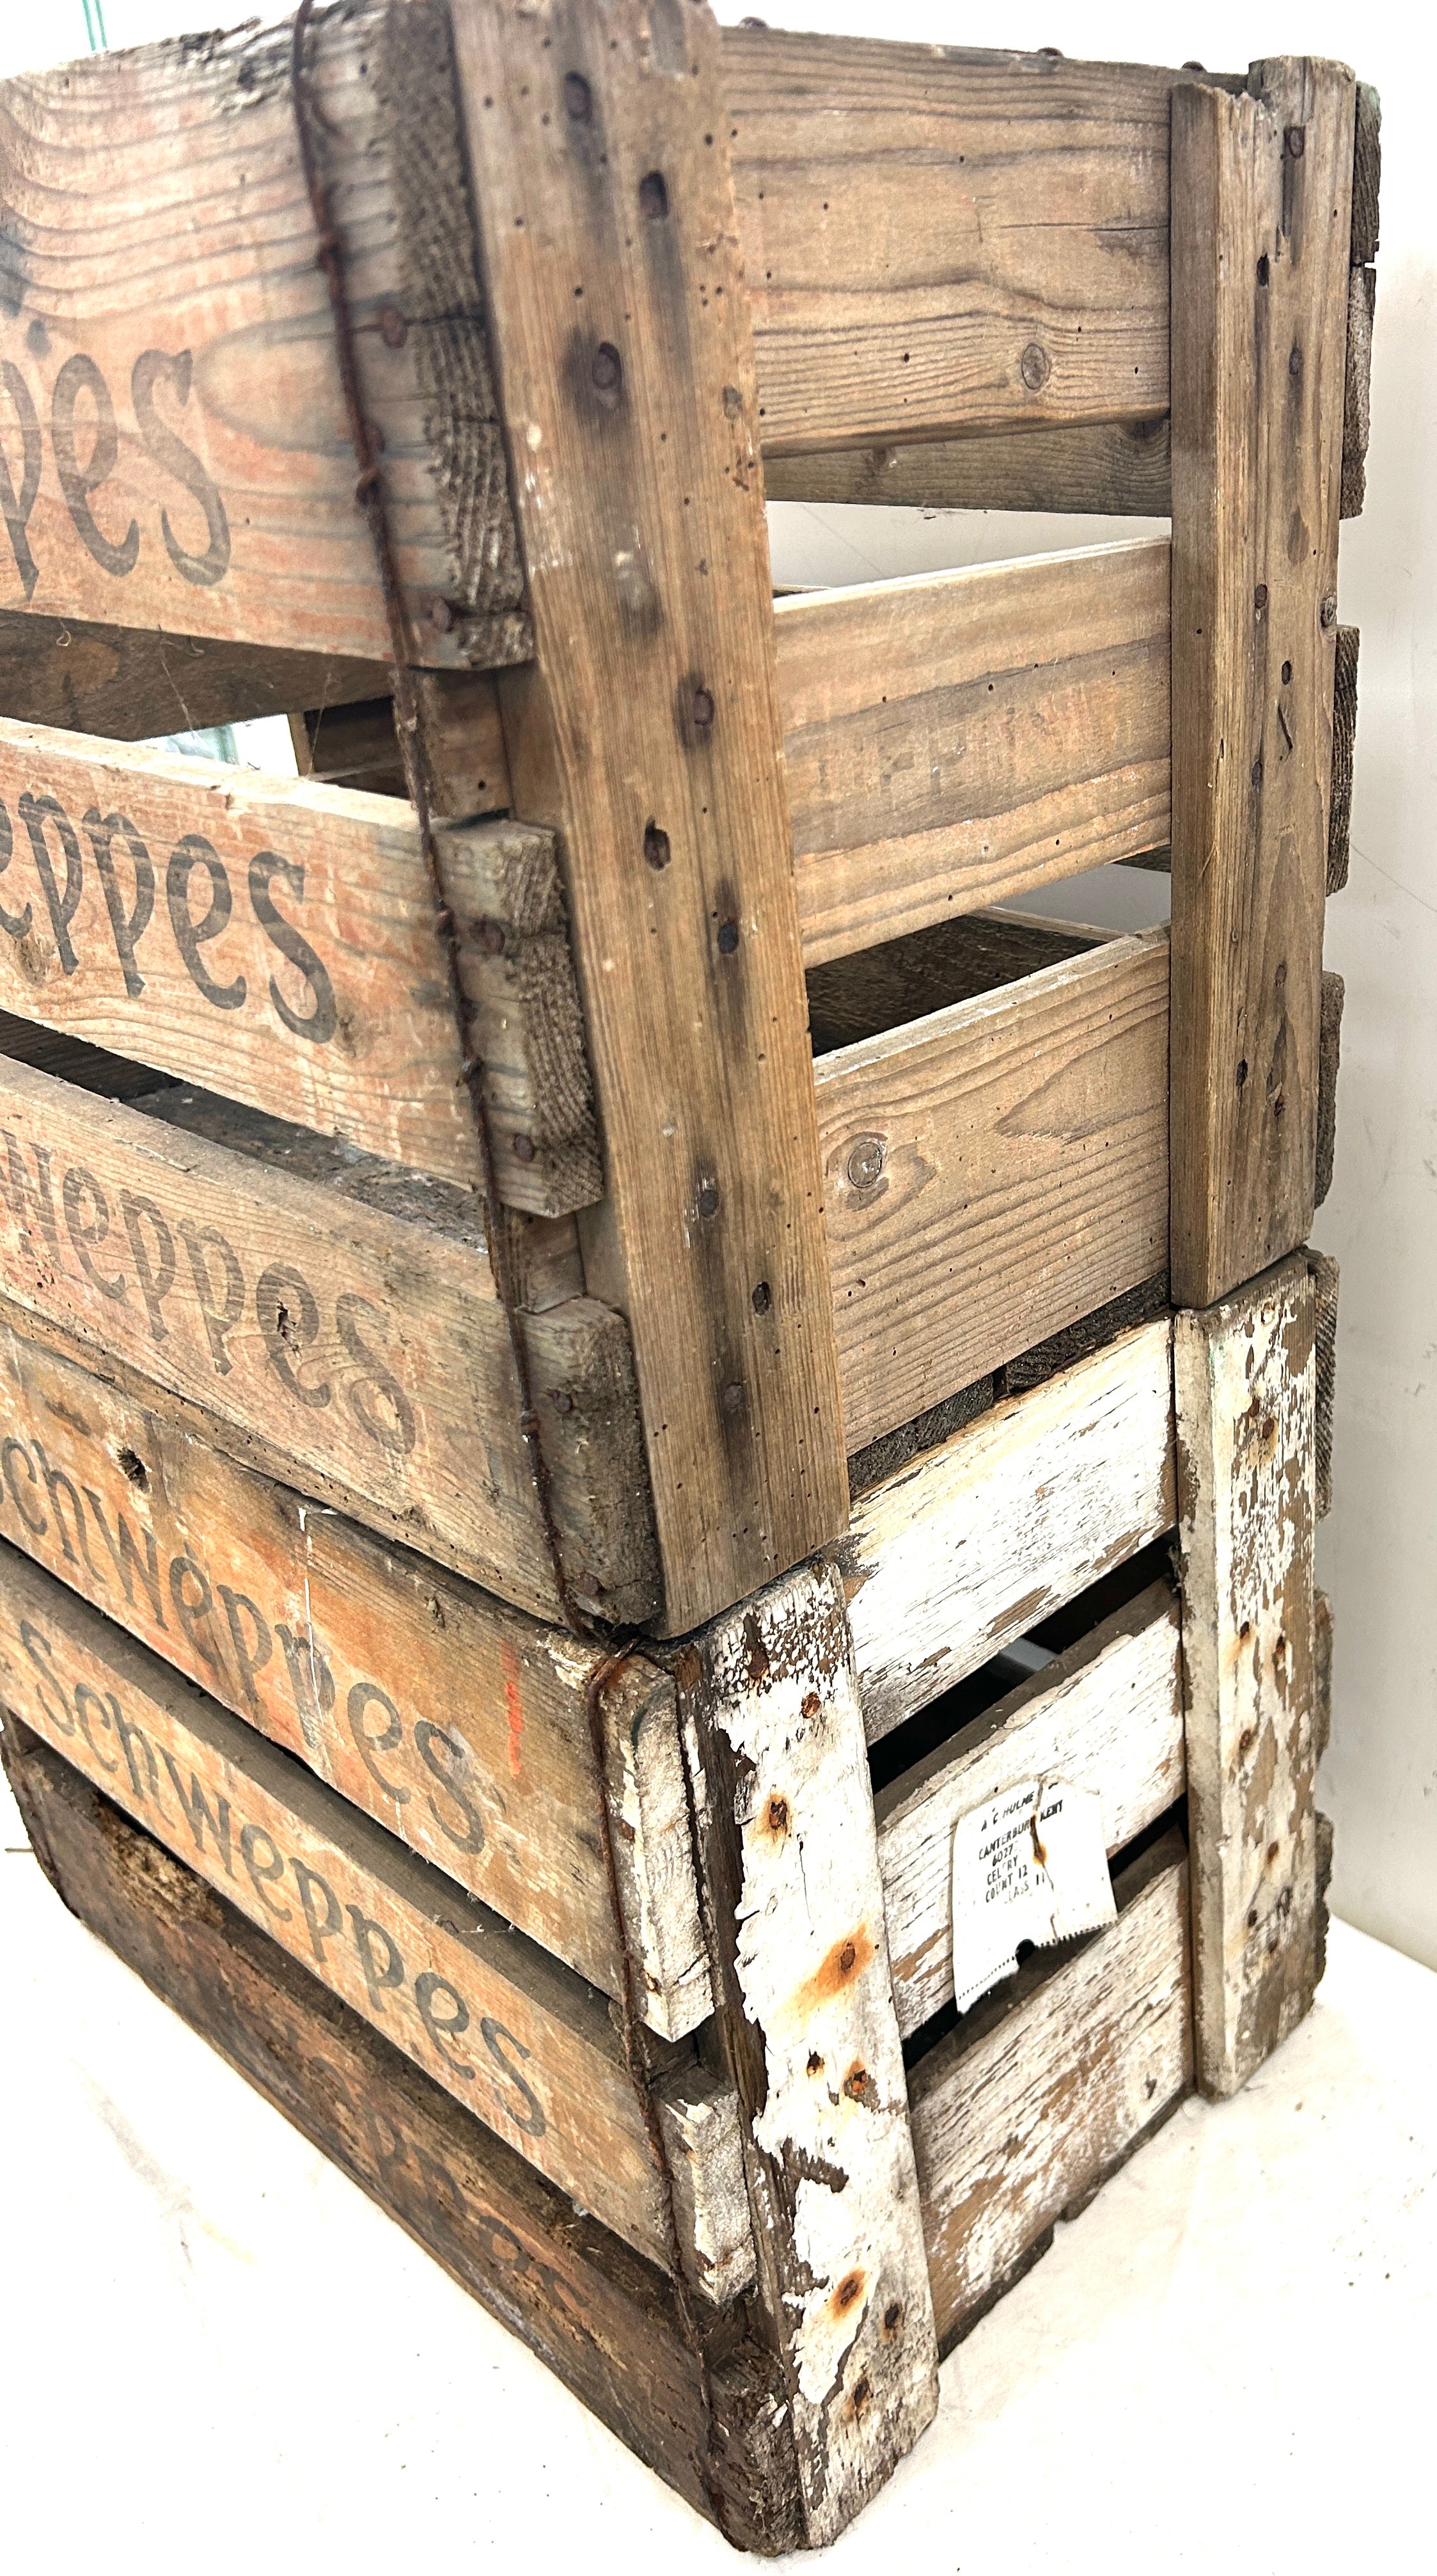 2 Vintage wooden Schweppes crates - Image 2 of 3